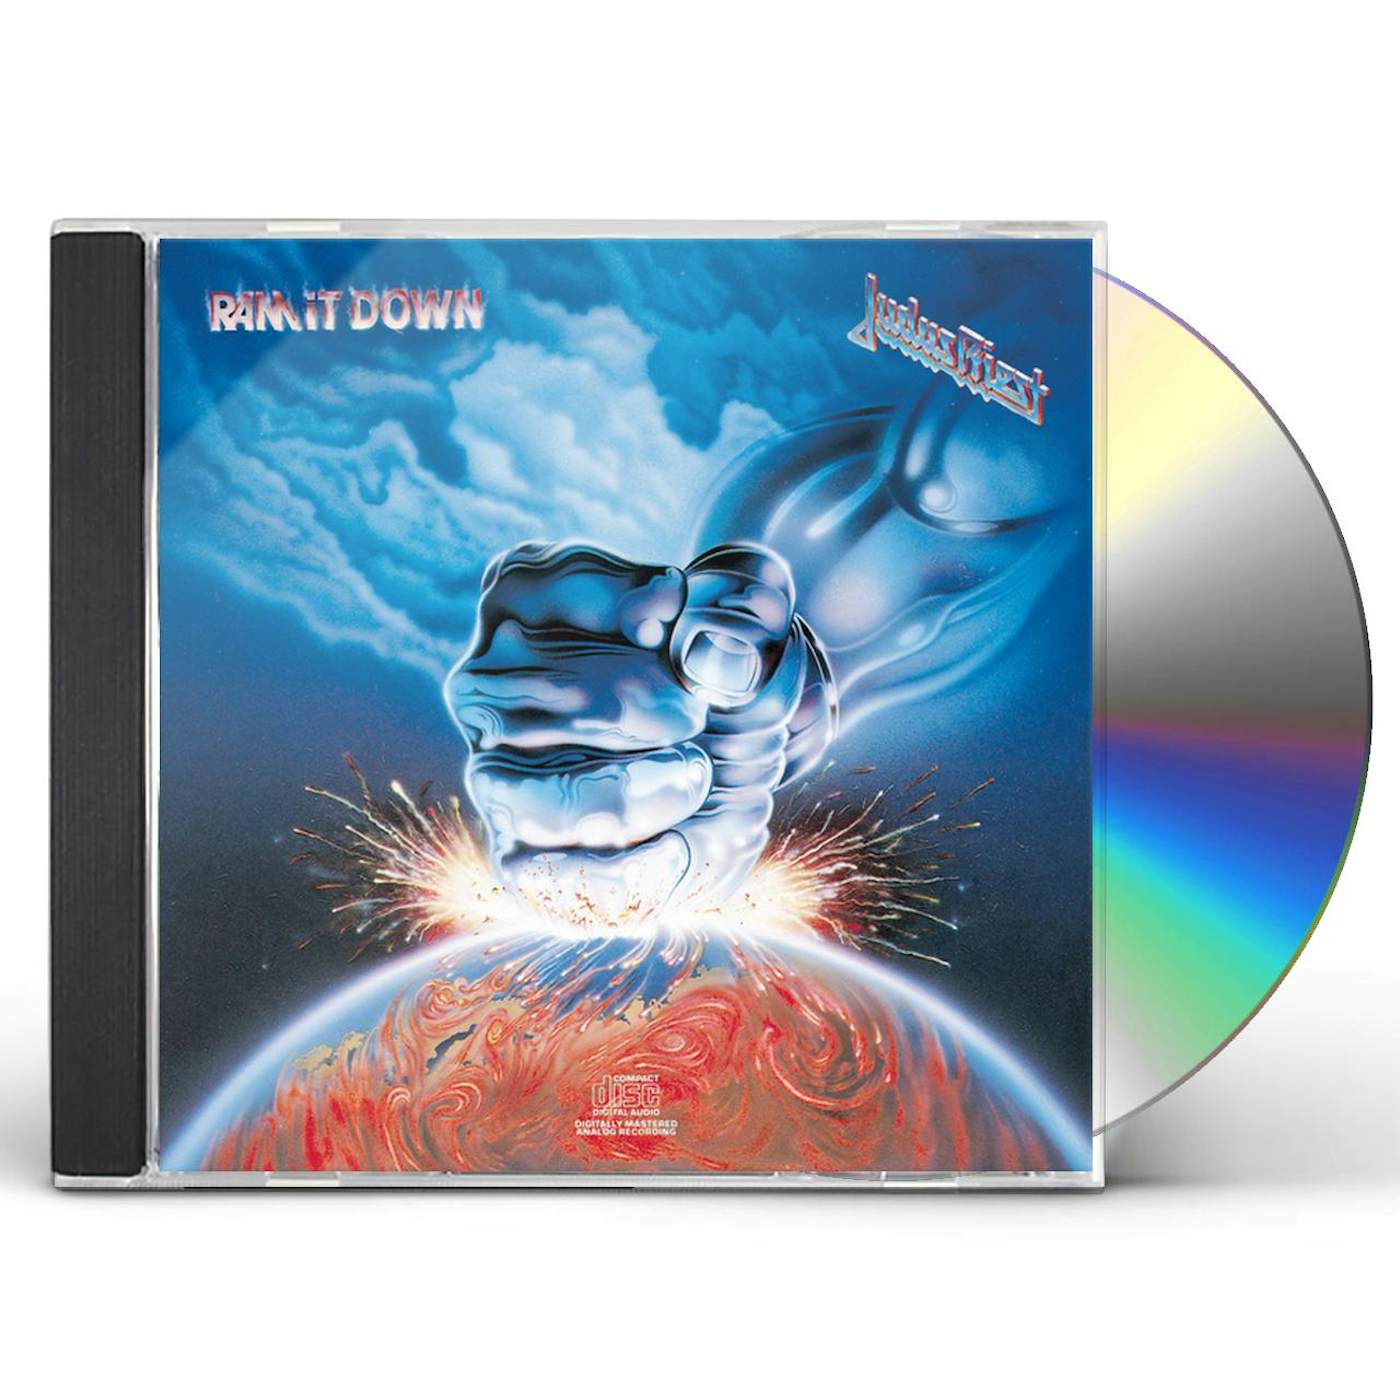 Judas Priest – Living After Midnight: The Best Of Judas Priest (CD) -  Harrisons Records